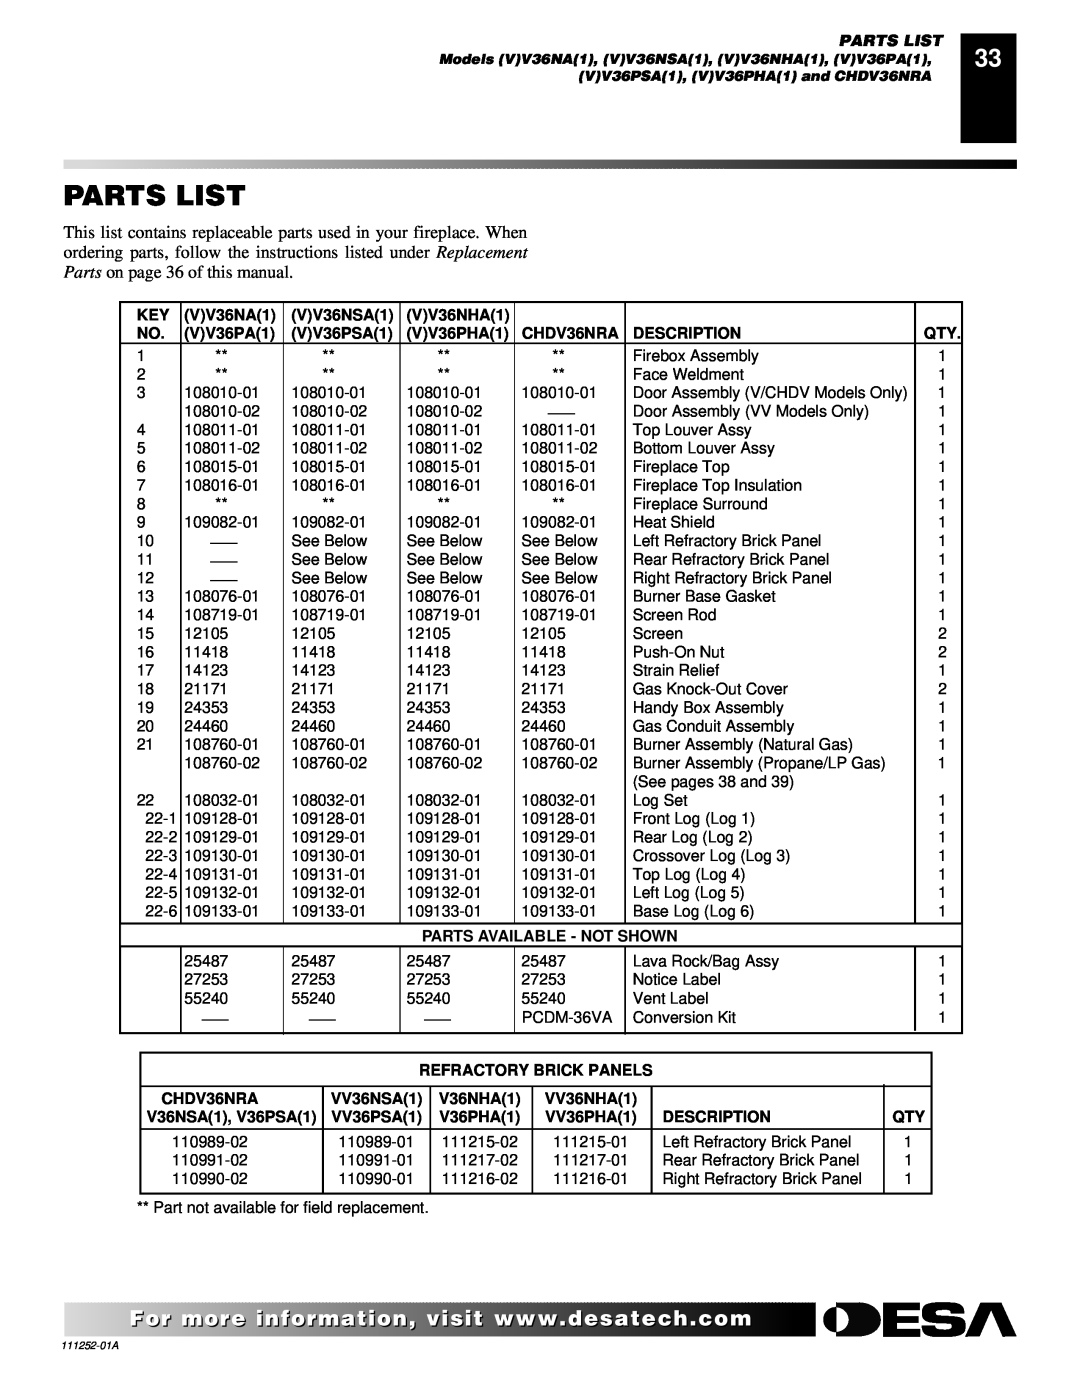 Desa CHDV36NRA Parts List, VV36NA1, VV36NSA1, VV36NHA1, VV36PA1, VV36PSA1, VV36PHA1, Description, Refractory Brick Panels 